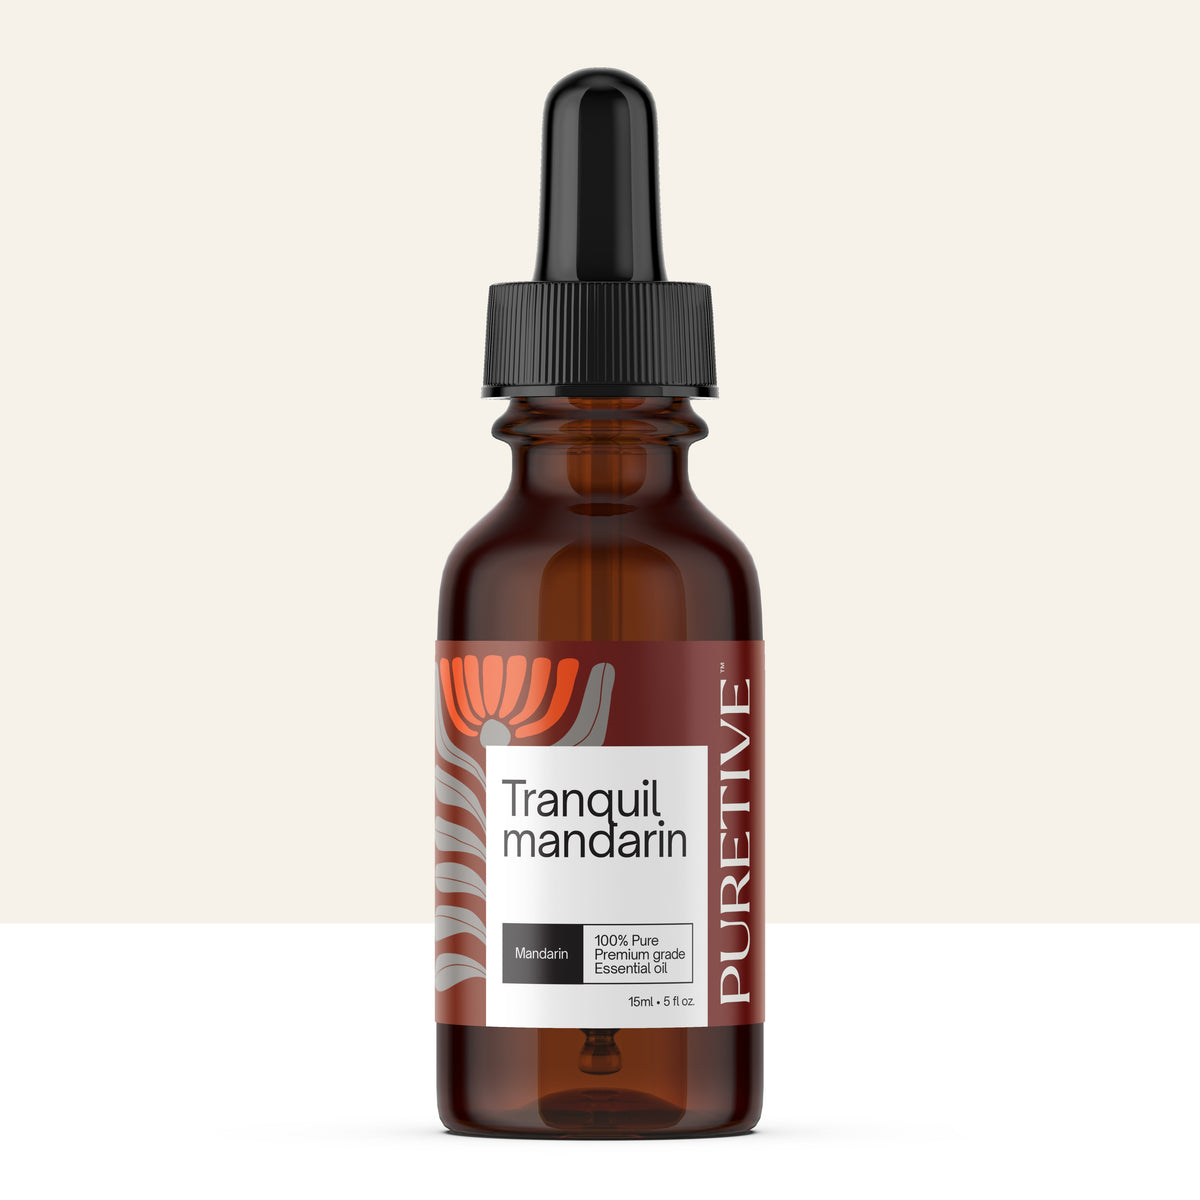 Mood uplifting - 100% Pure Mandarin Essential Oil